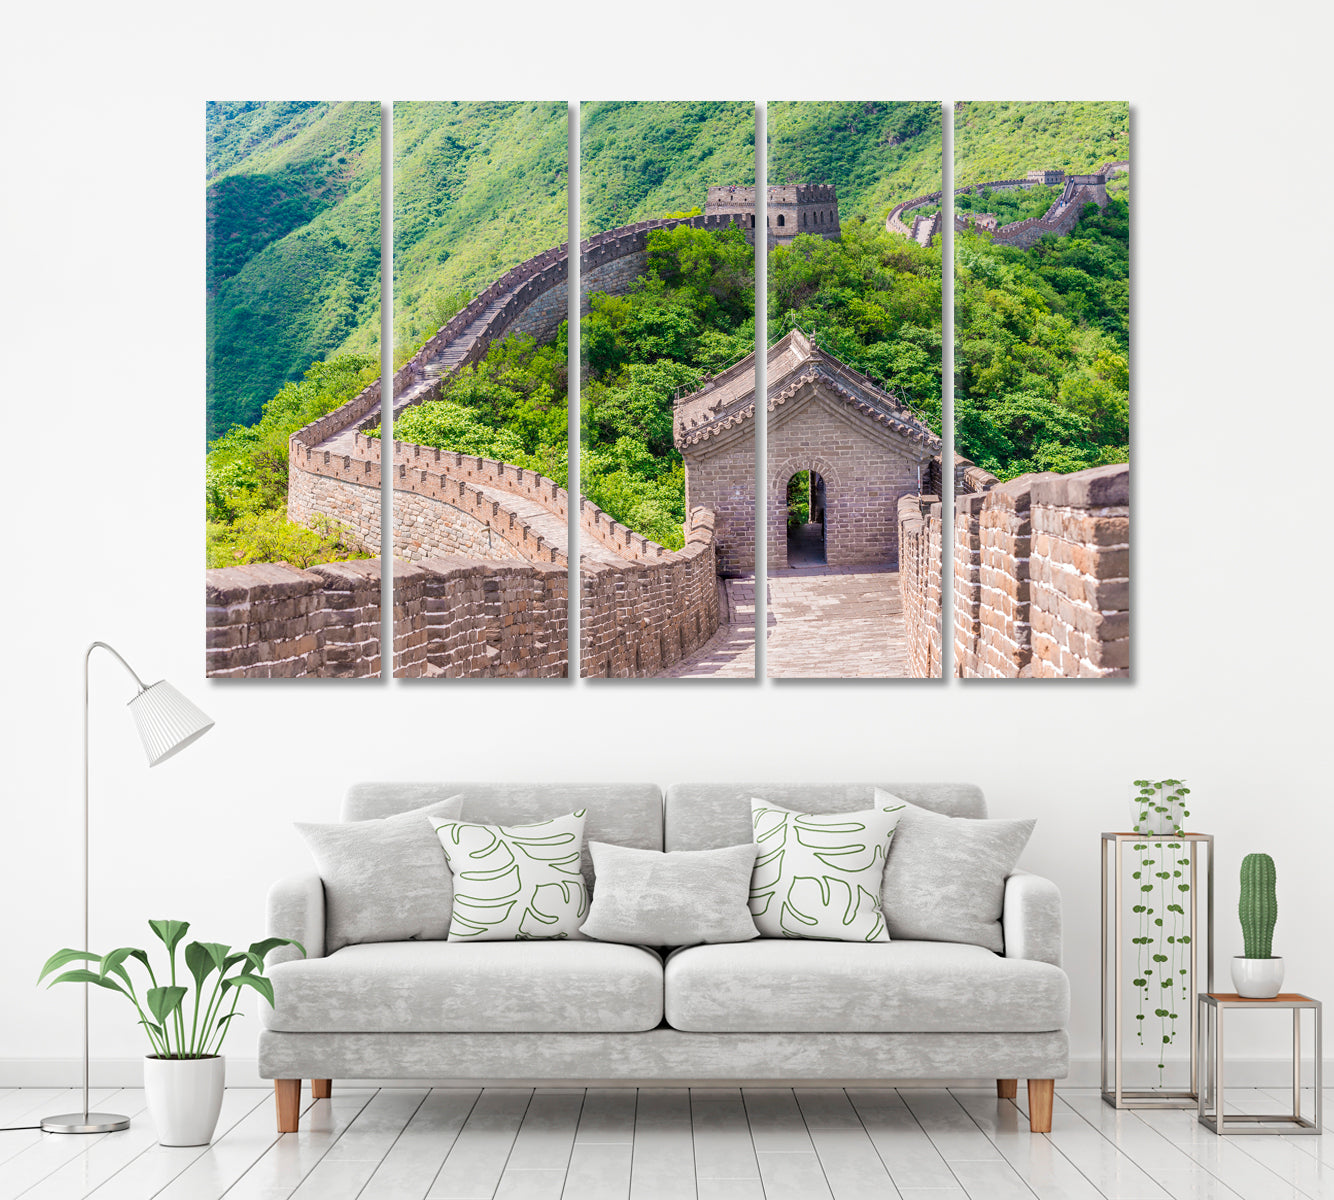 Mutianyu Great Wall of China Canvas Print ArtLexy 5 Panels 36"x24" inches 